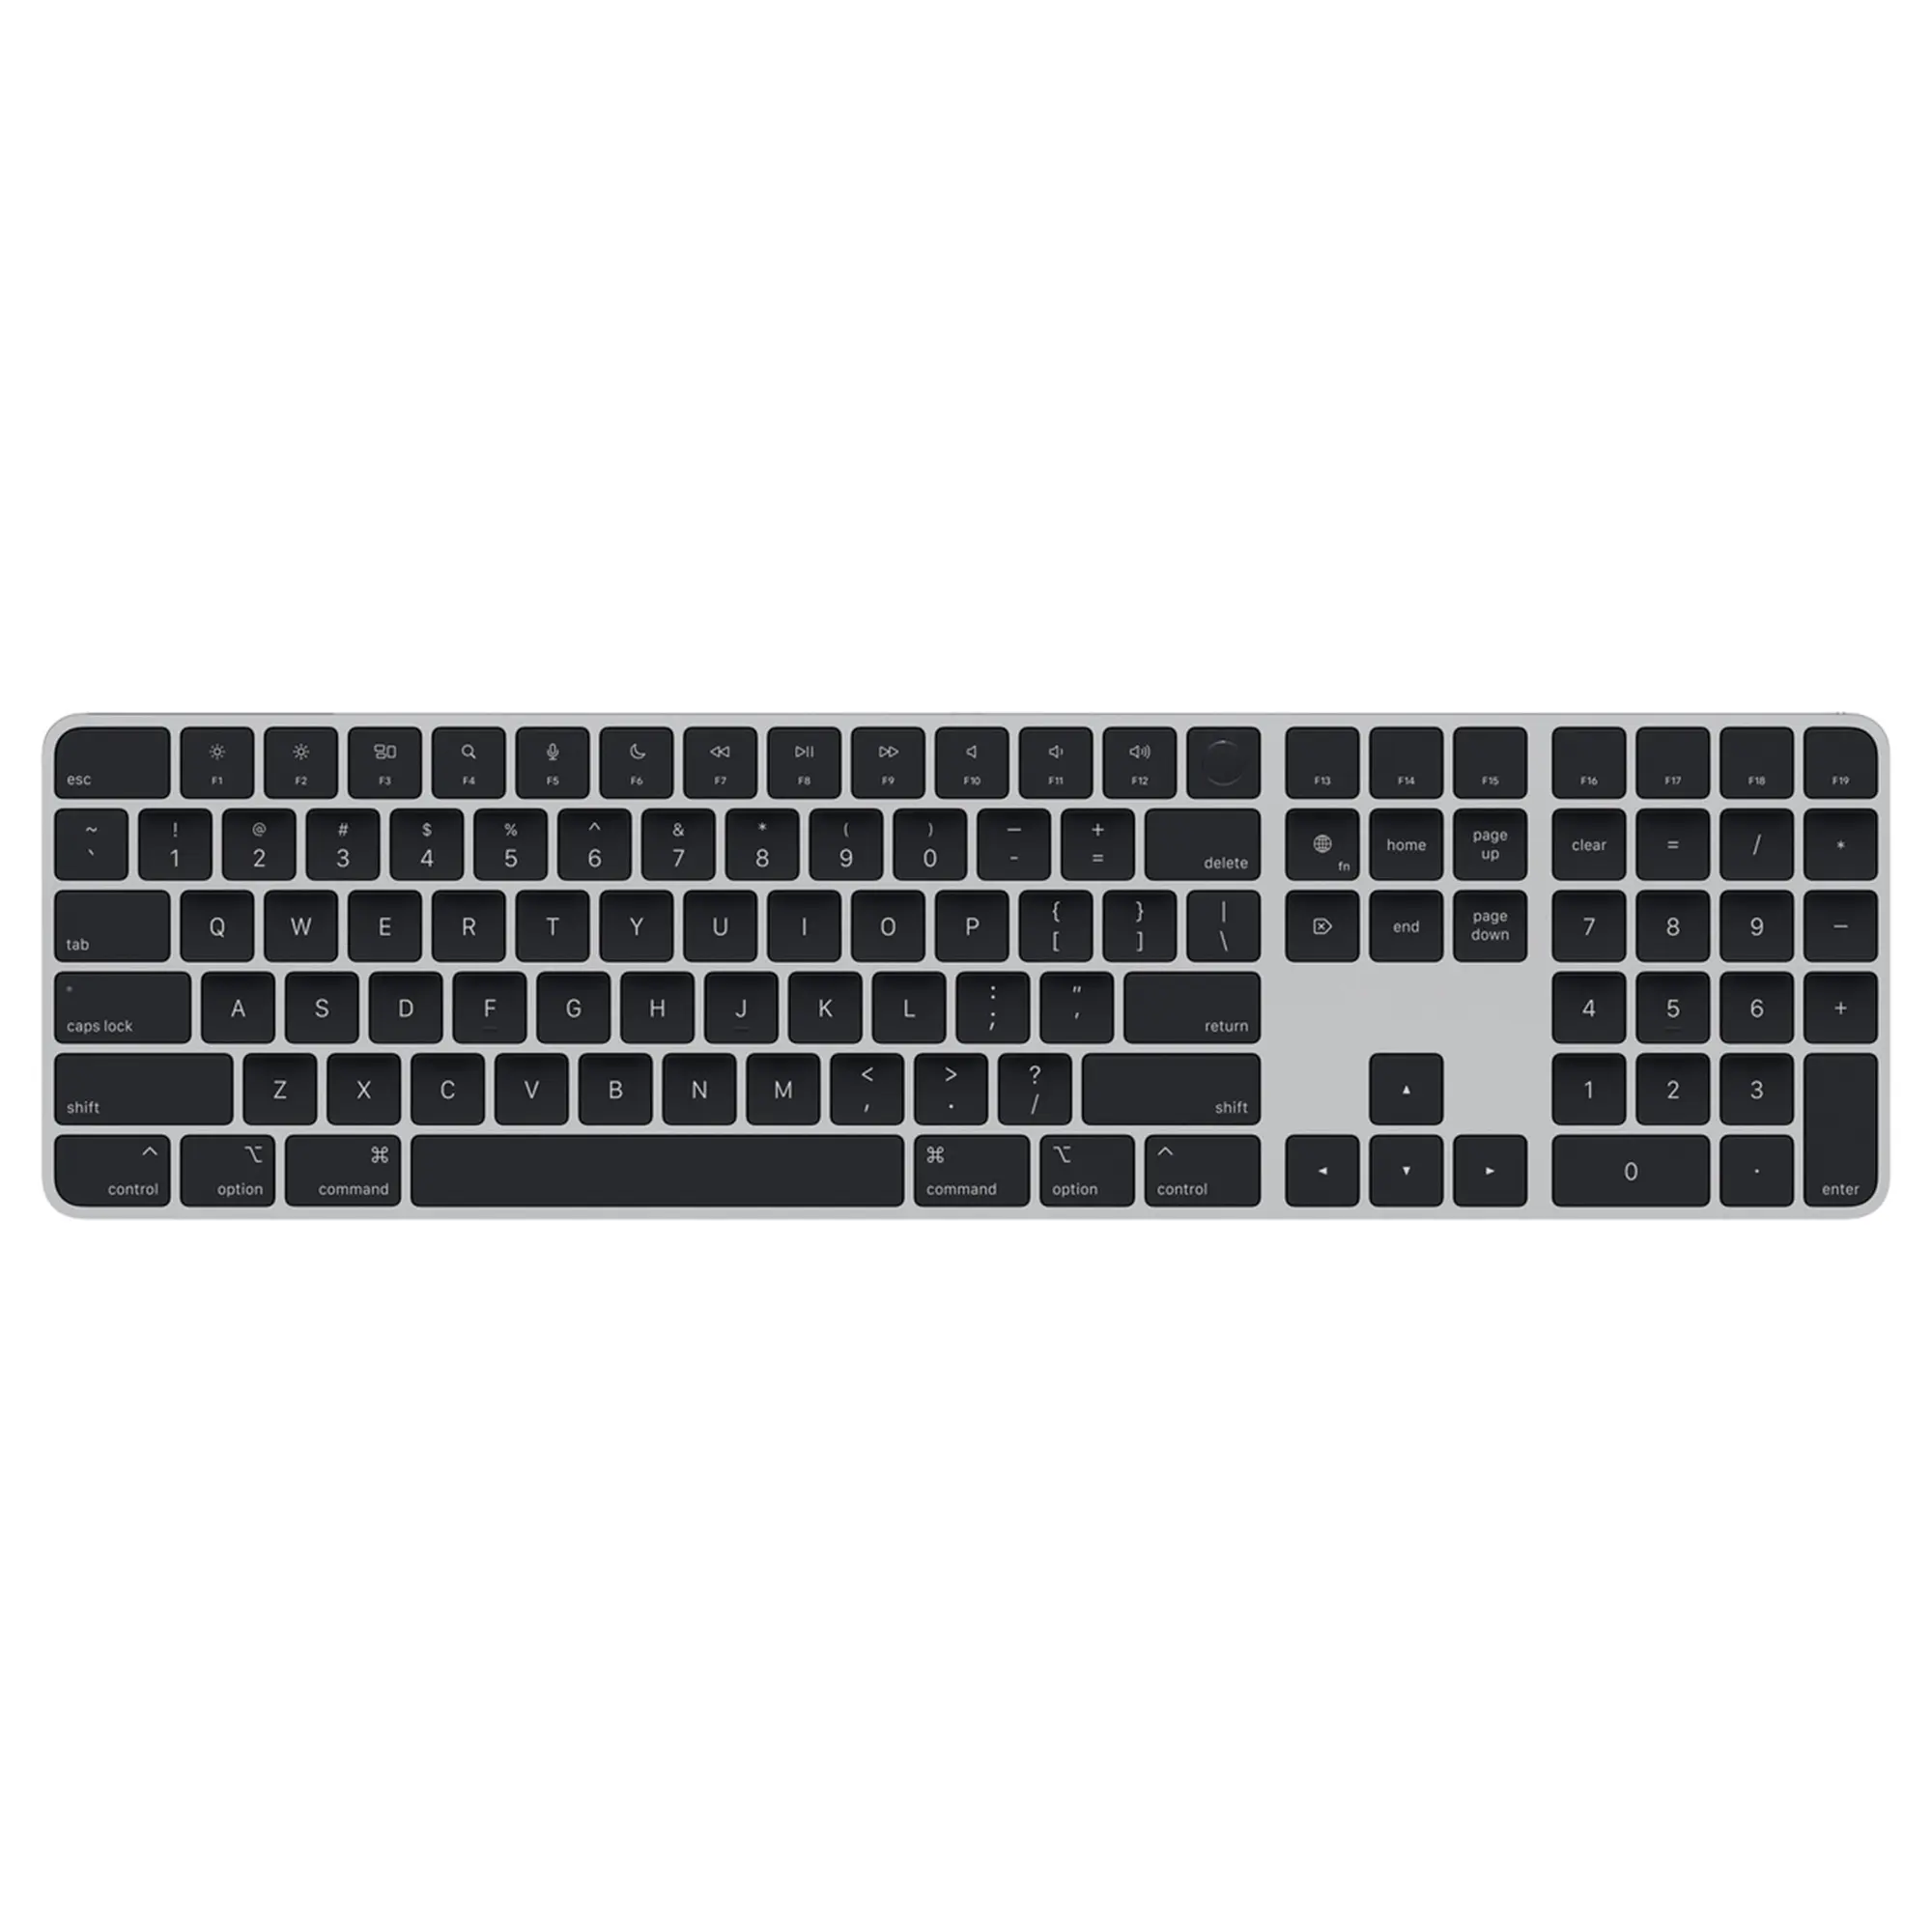 Keyboard nirkabel asli baru MMMR3LL/A A2520 keyboard pengisian daya keyboard ajaib ID Buka kunci sidik jari dengan kemasan